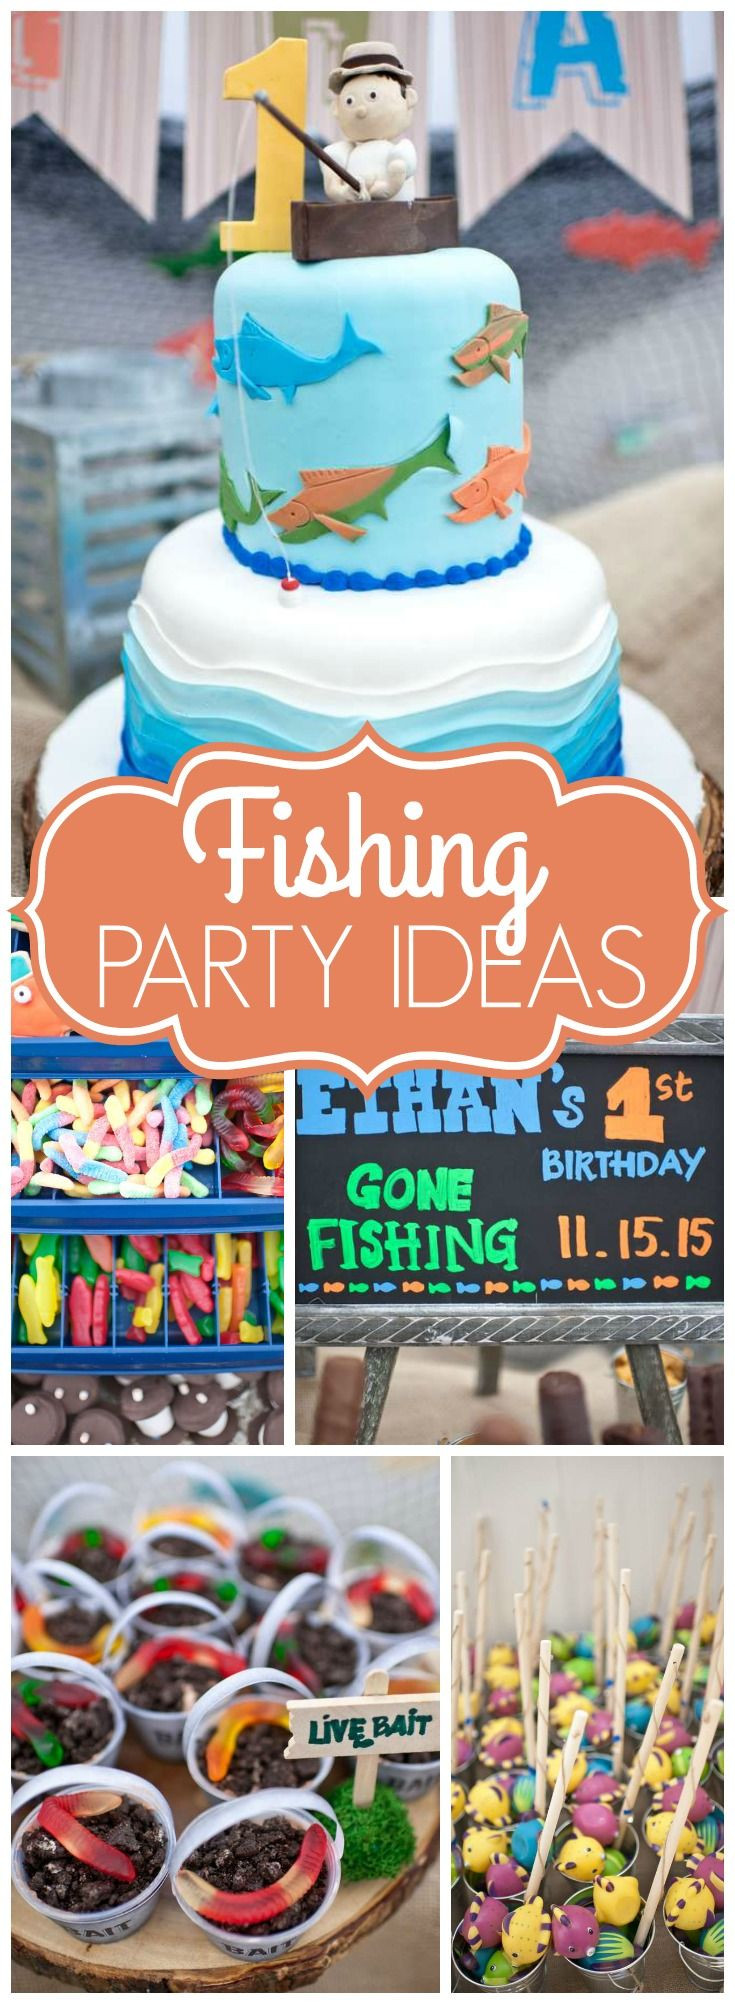 First Birthday Party Ideas Boys
 Gone Fishing Birthday "Ethan s Gone Fishing 1st Birthday